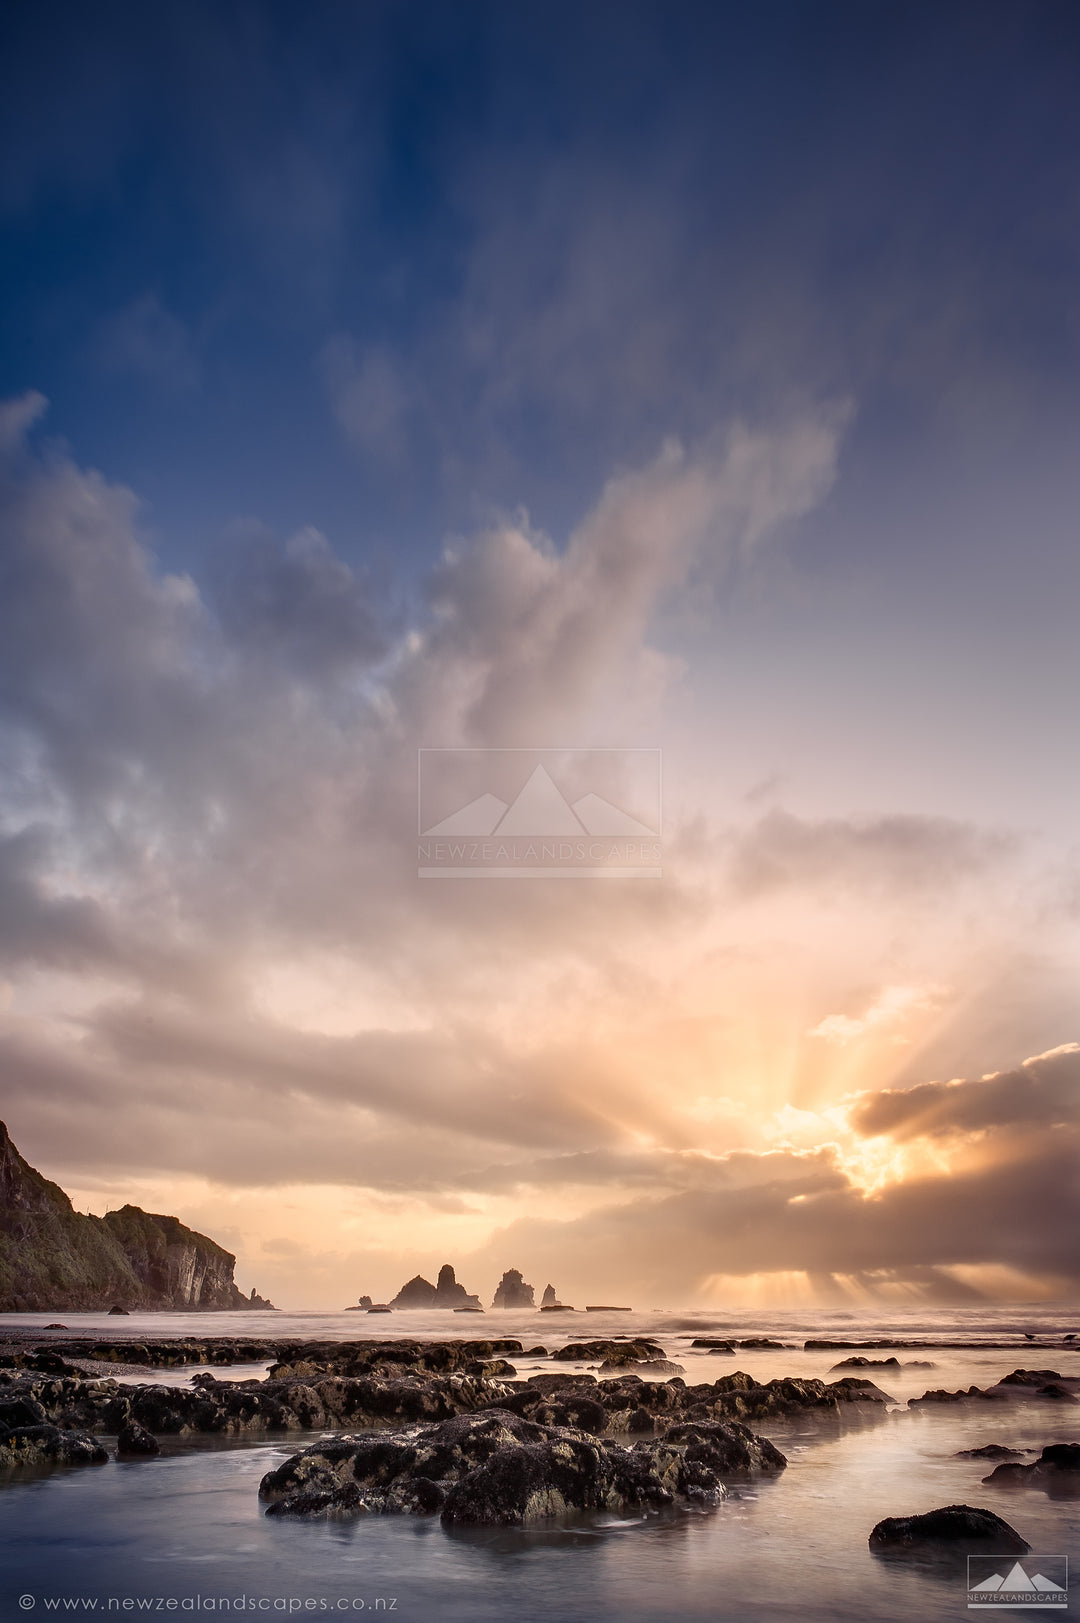 Rock Formations at Motukiekie Beach - Newzealandscapes photo canvas prints New Zealand